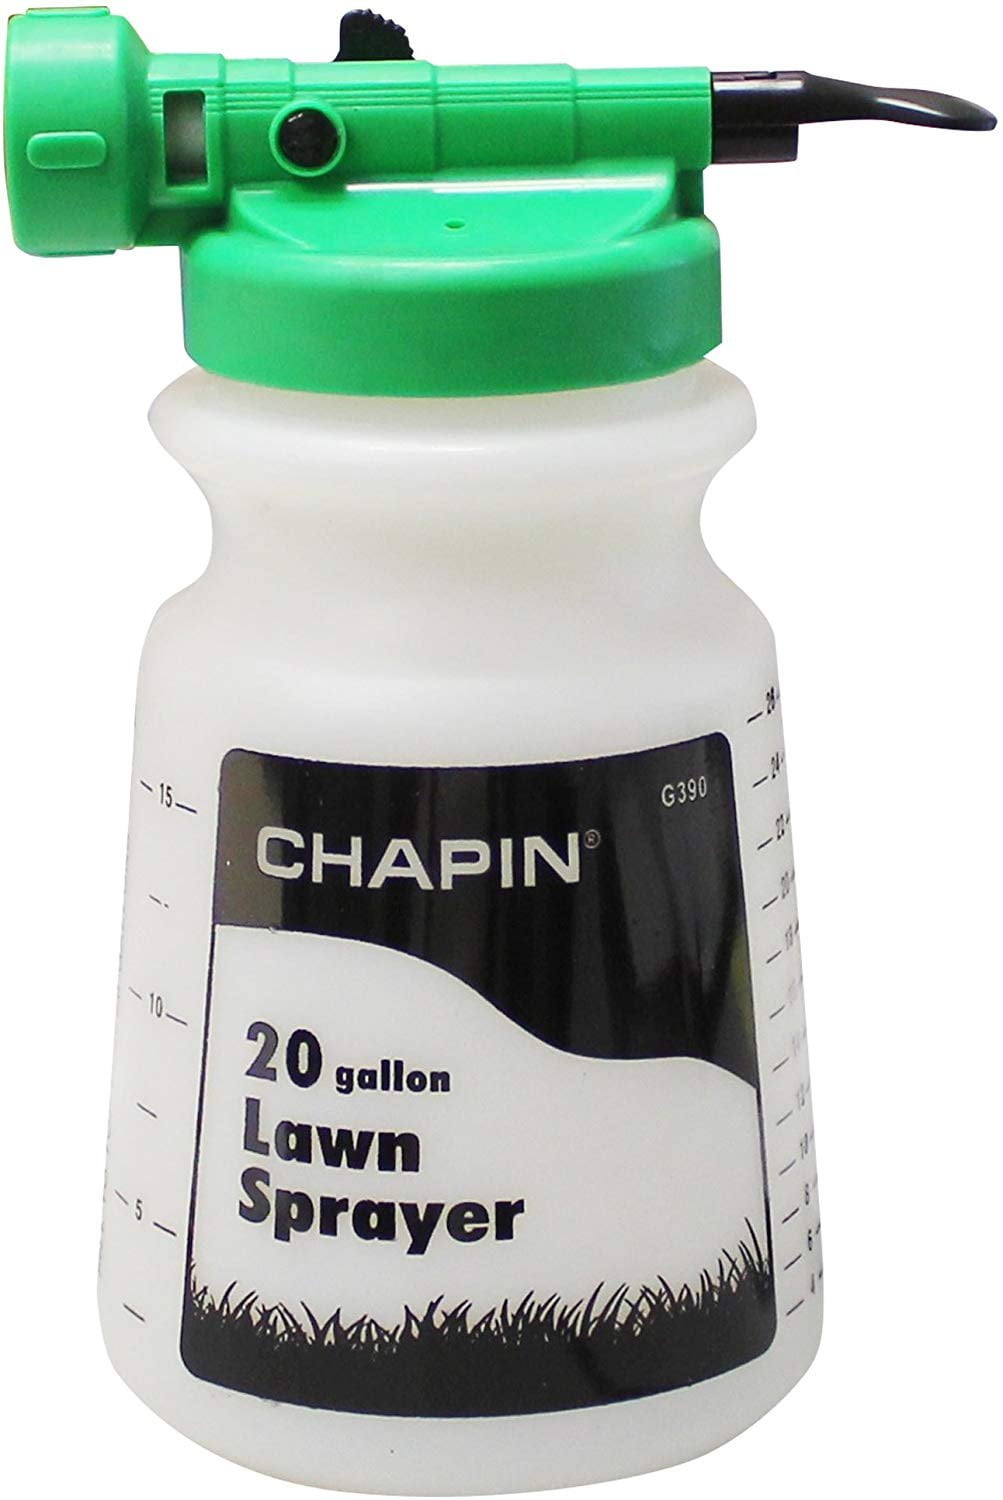 Chapin Hose End Sprayer, Spray Foam Gun